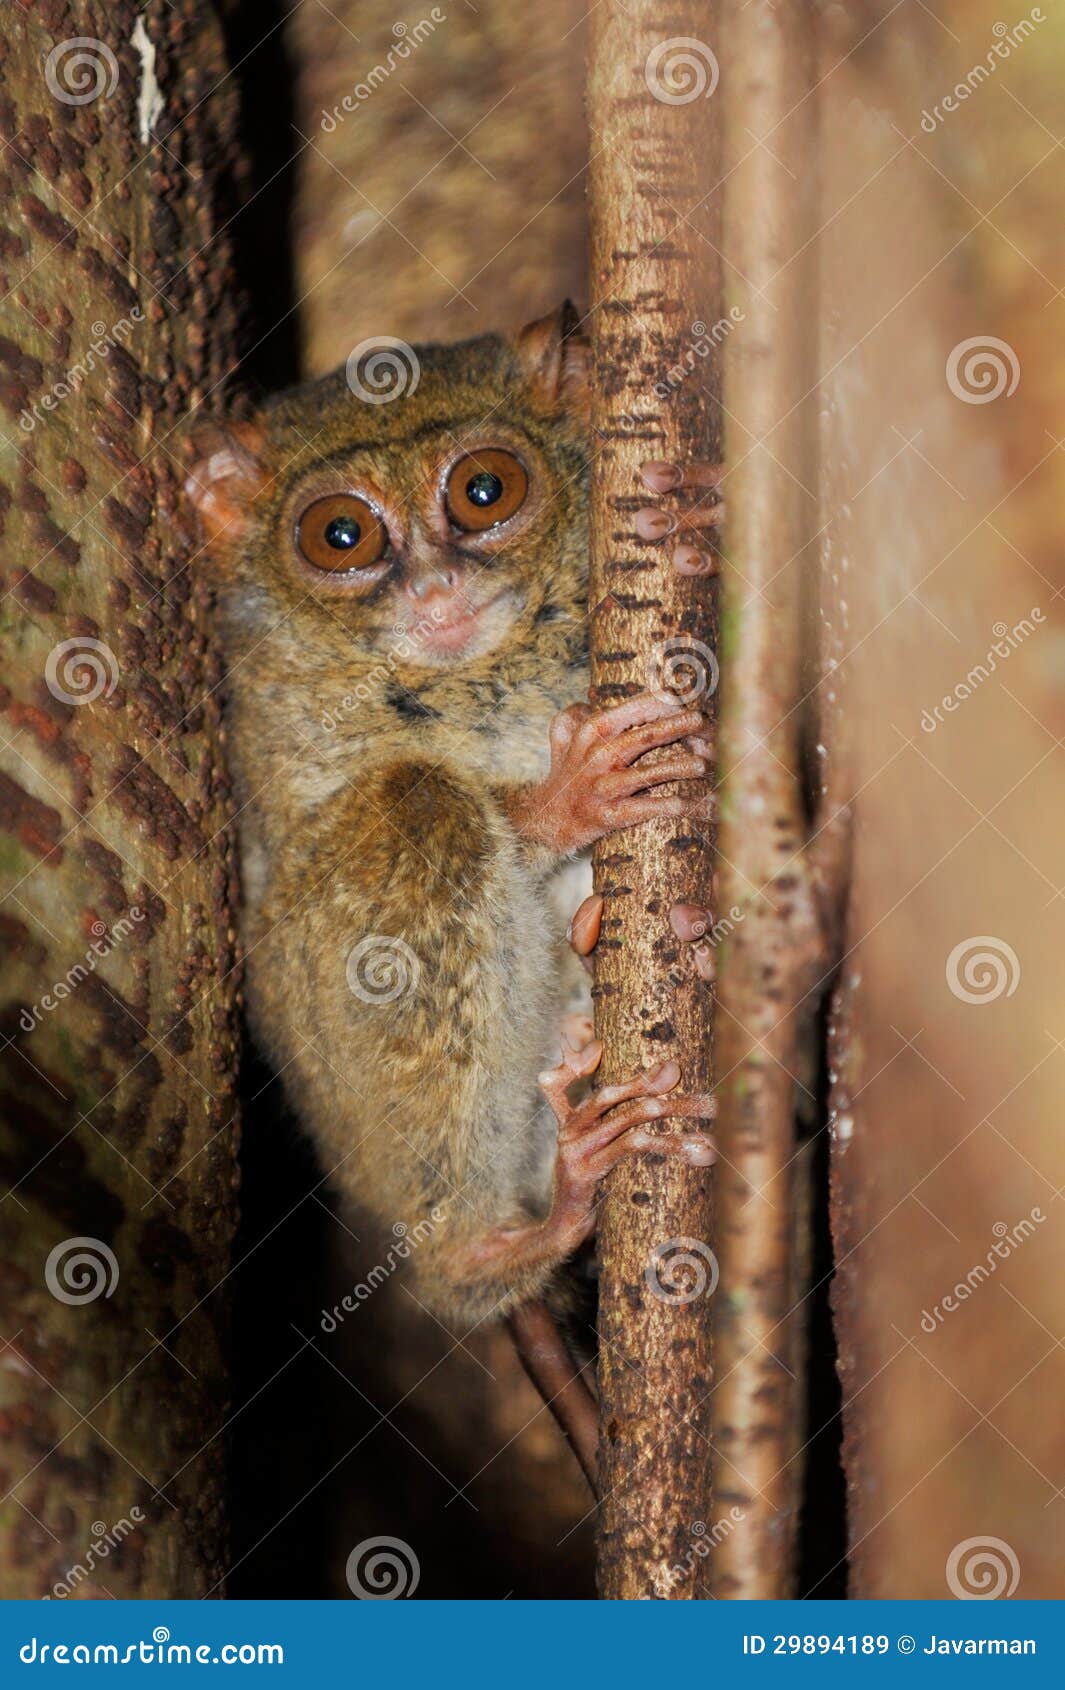 tarsier, the smallest primate, tangkoko, sulawesi, indonesia